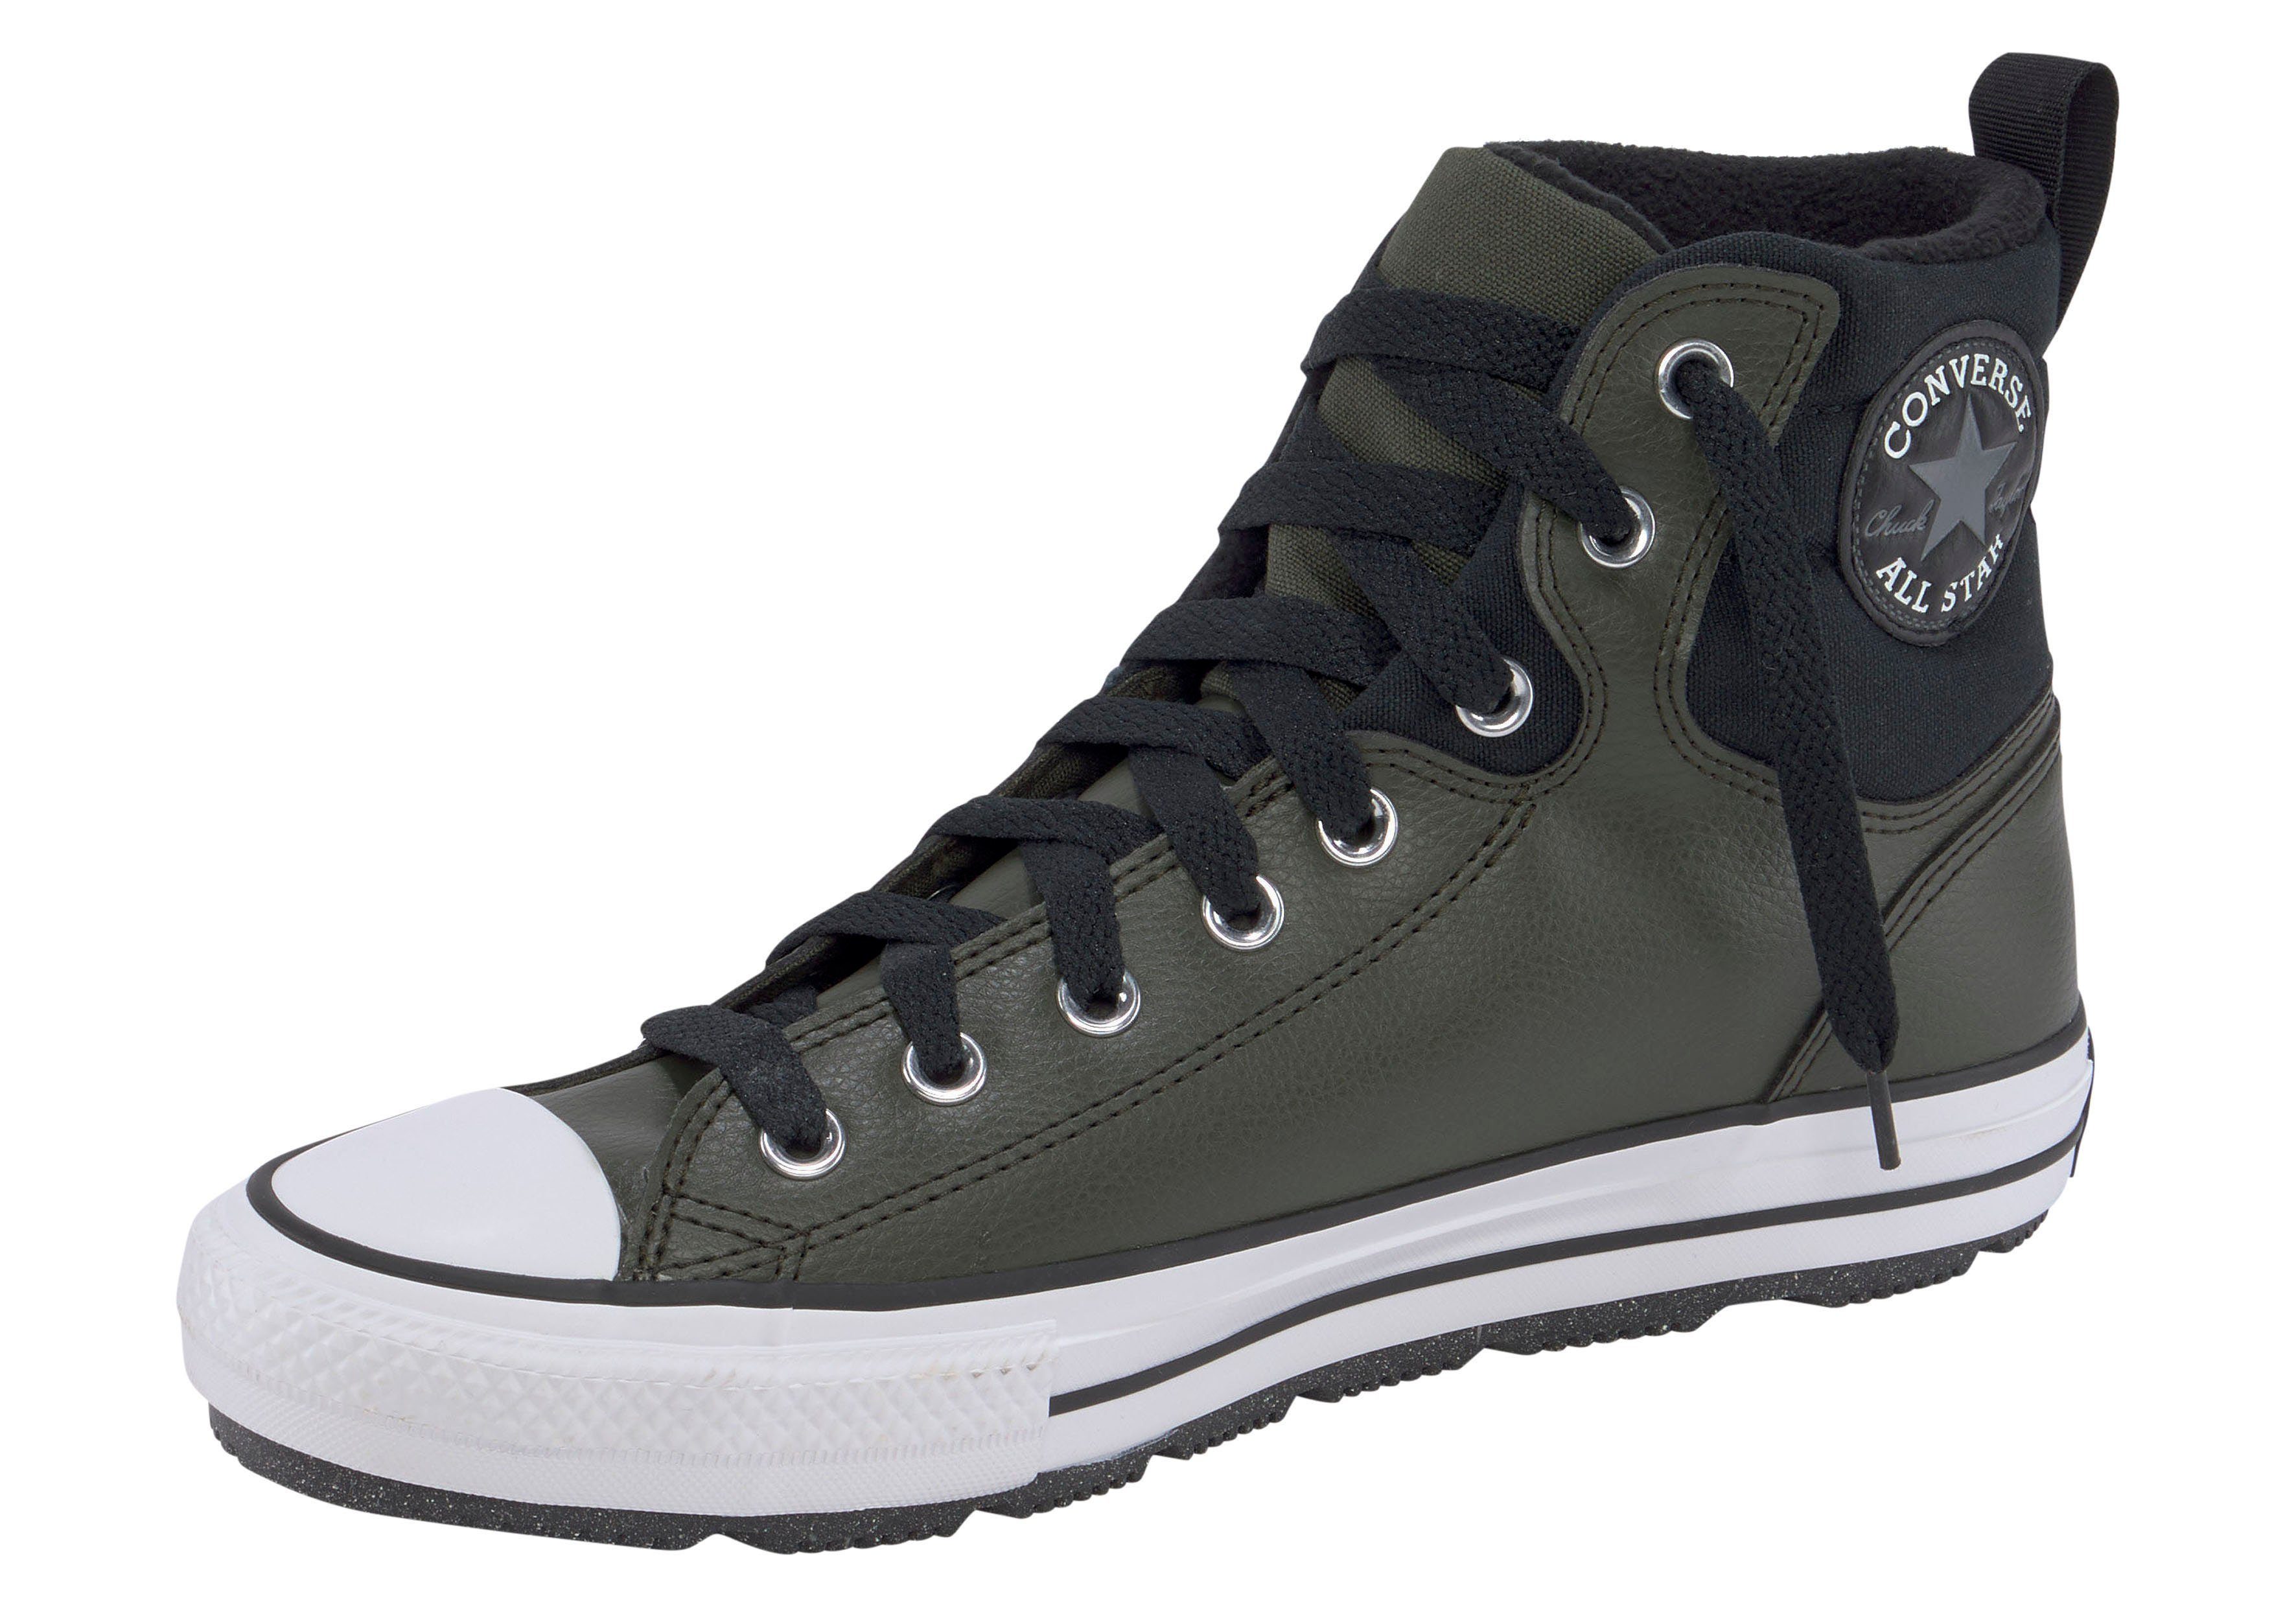 Converse »CHUCK TAYLOR ALL STAR WATER RESISTA« Sneaker online kaufen | OTTO